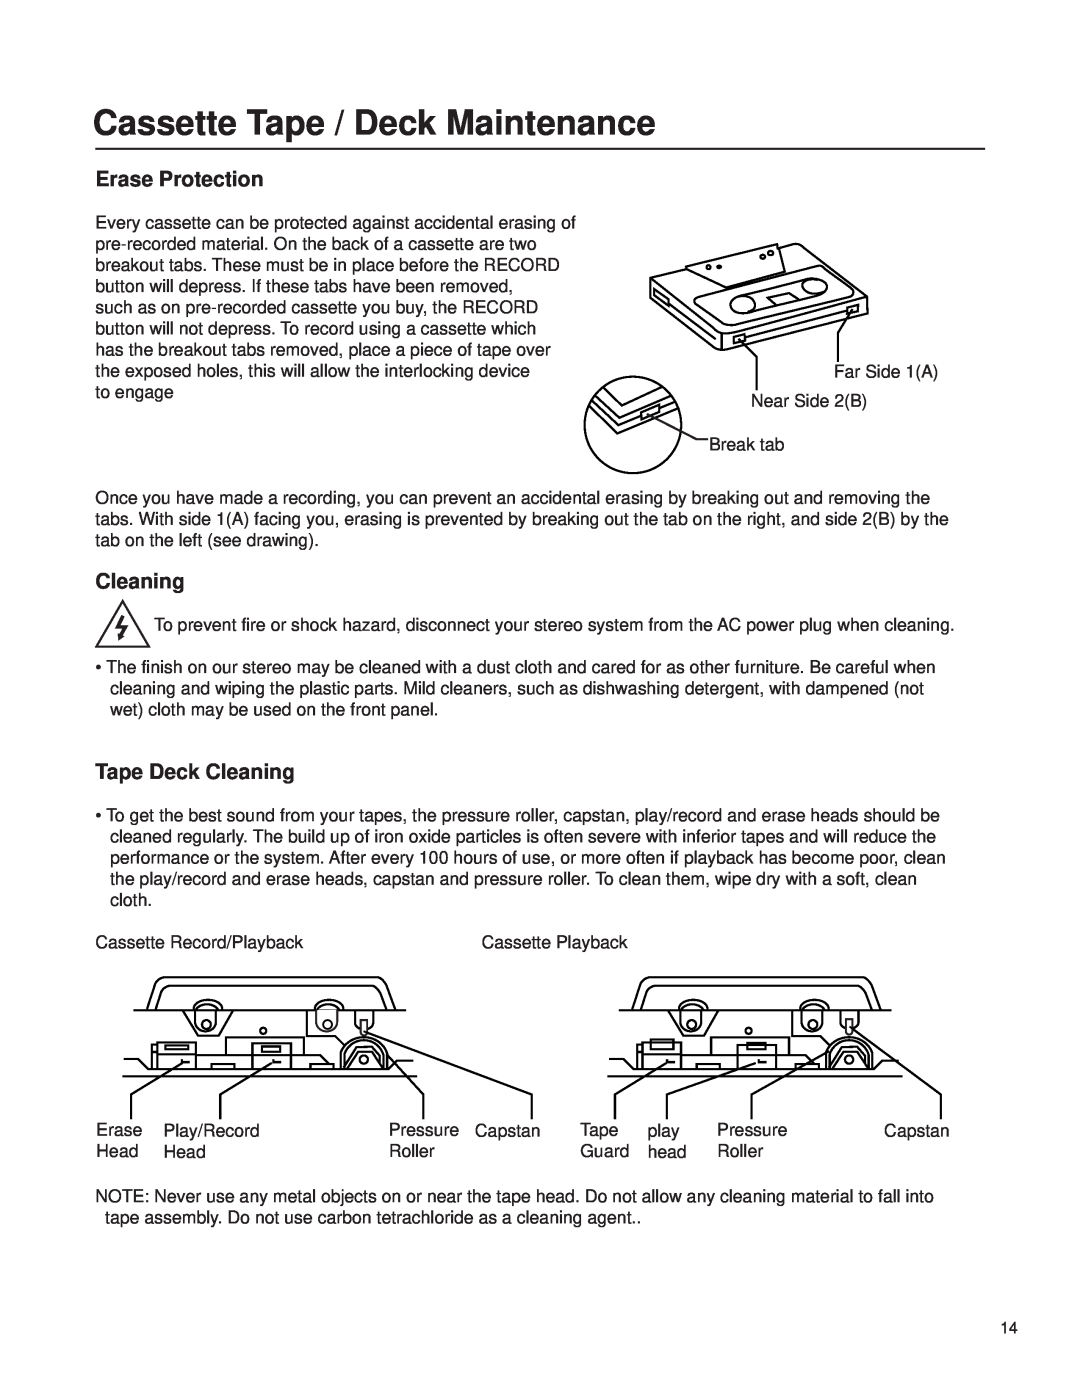 VocoPro Cassette Deck owner manual Cassette Tape / Deck Maintenance, Erase Protection, Tape Deck Cleaning 